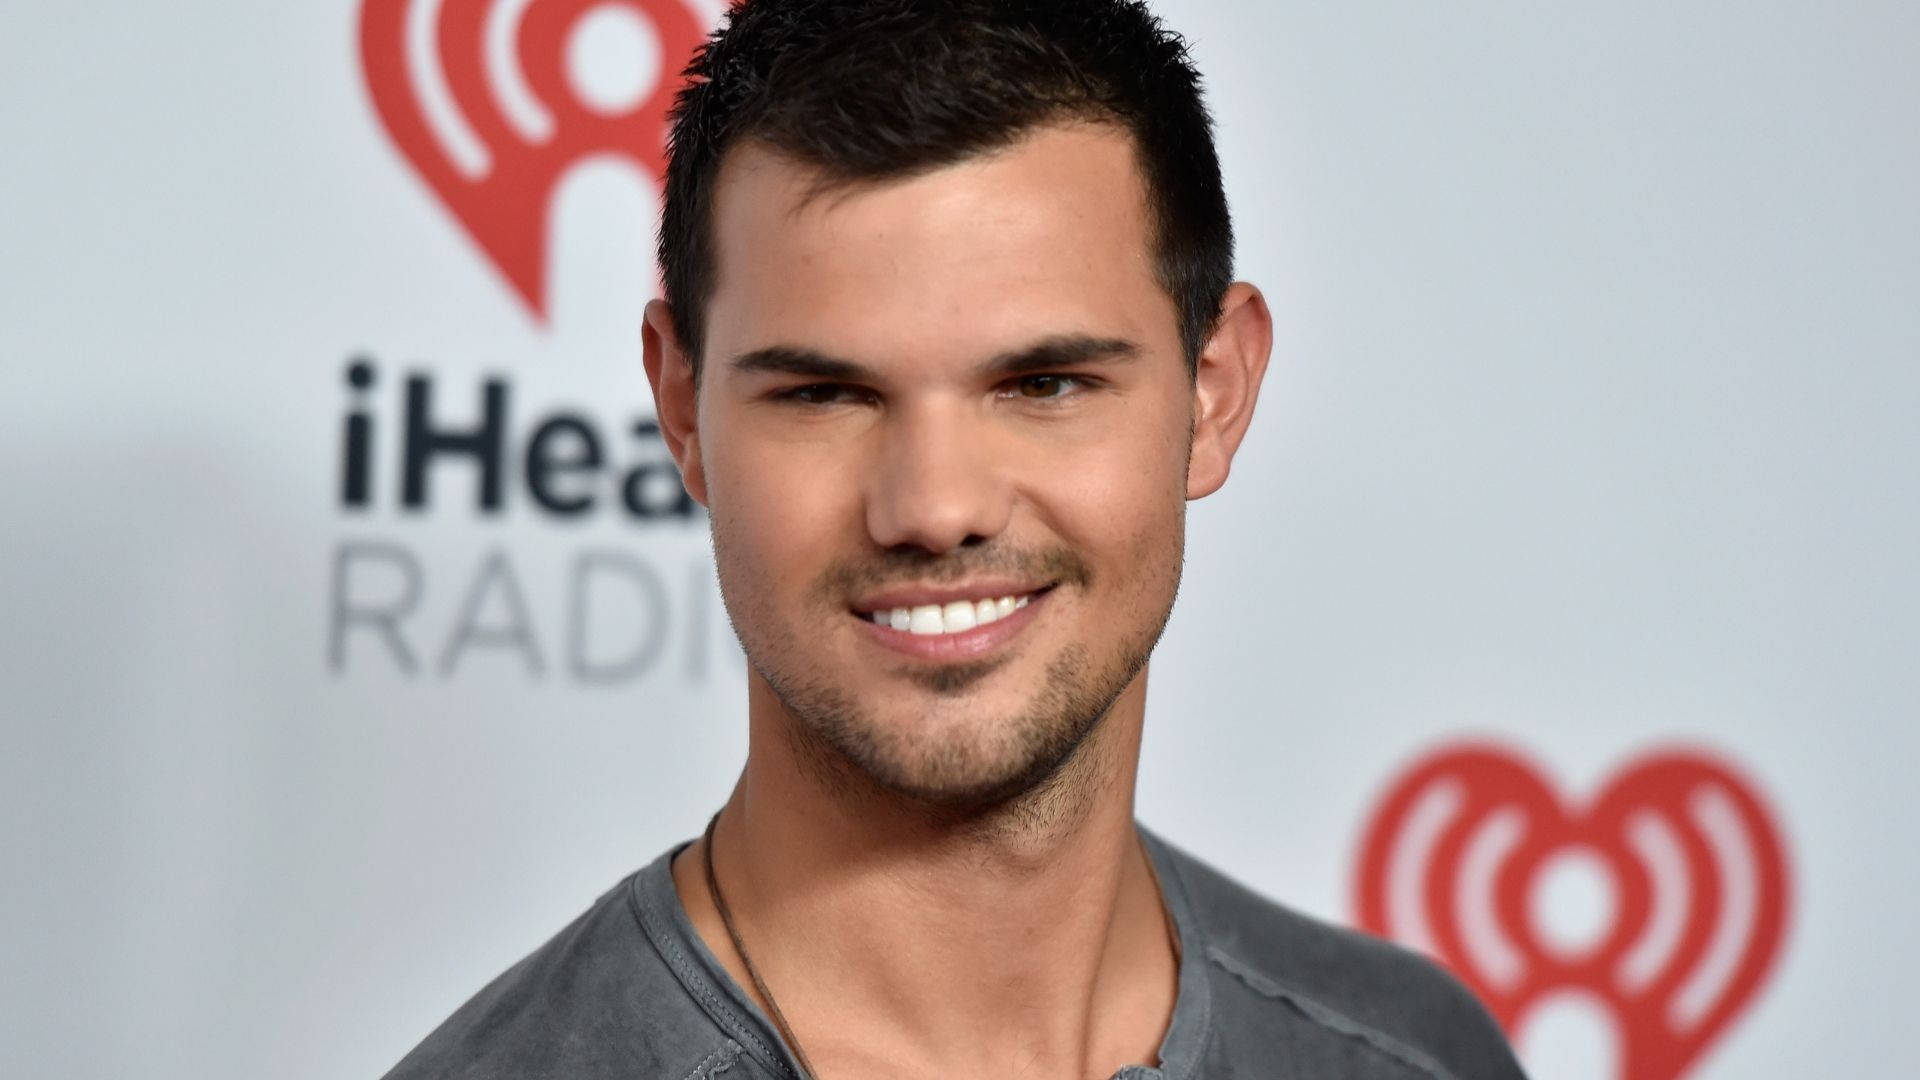 Taylor Lautner Sweet Smile Wallpaper